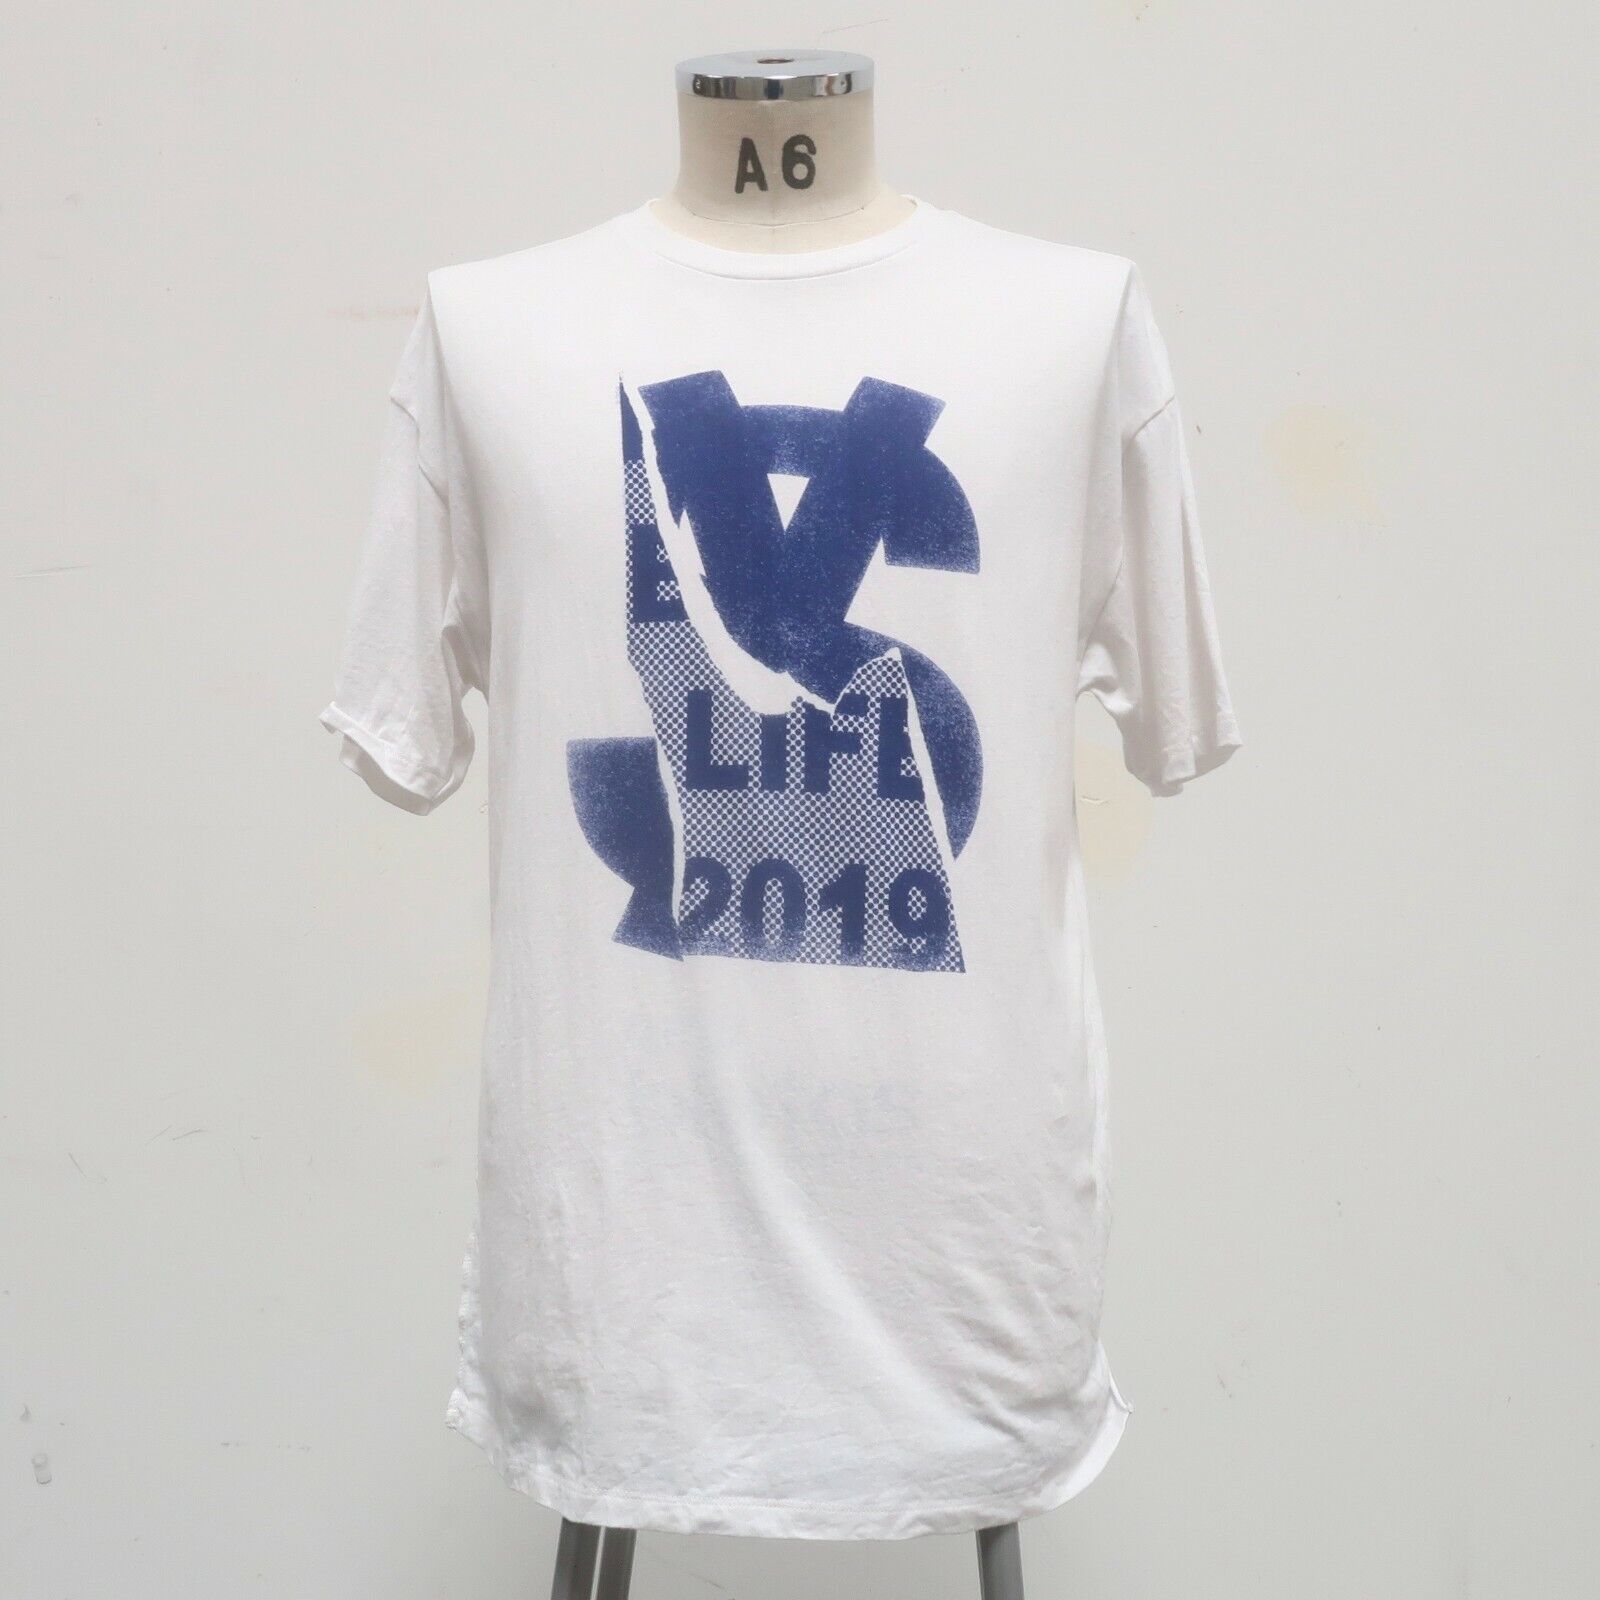 Ksubi Logo Shirt Size S 2019 | eBay